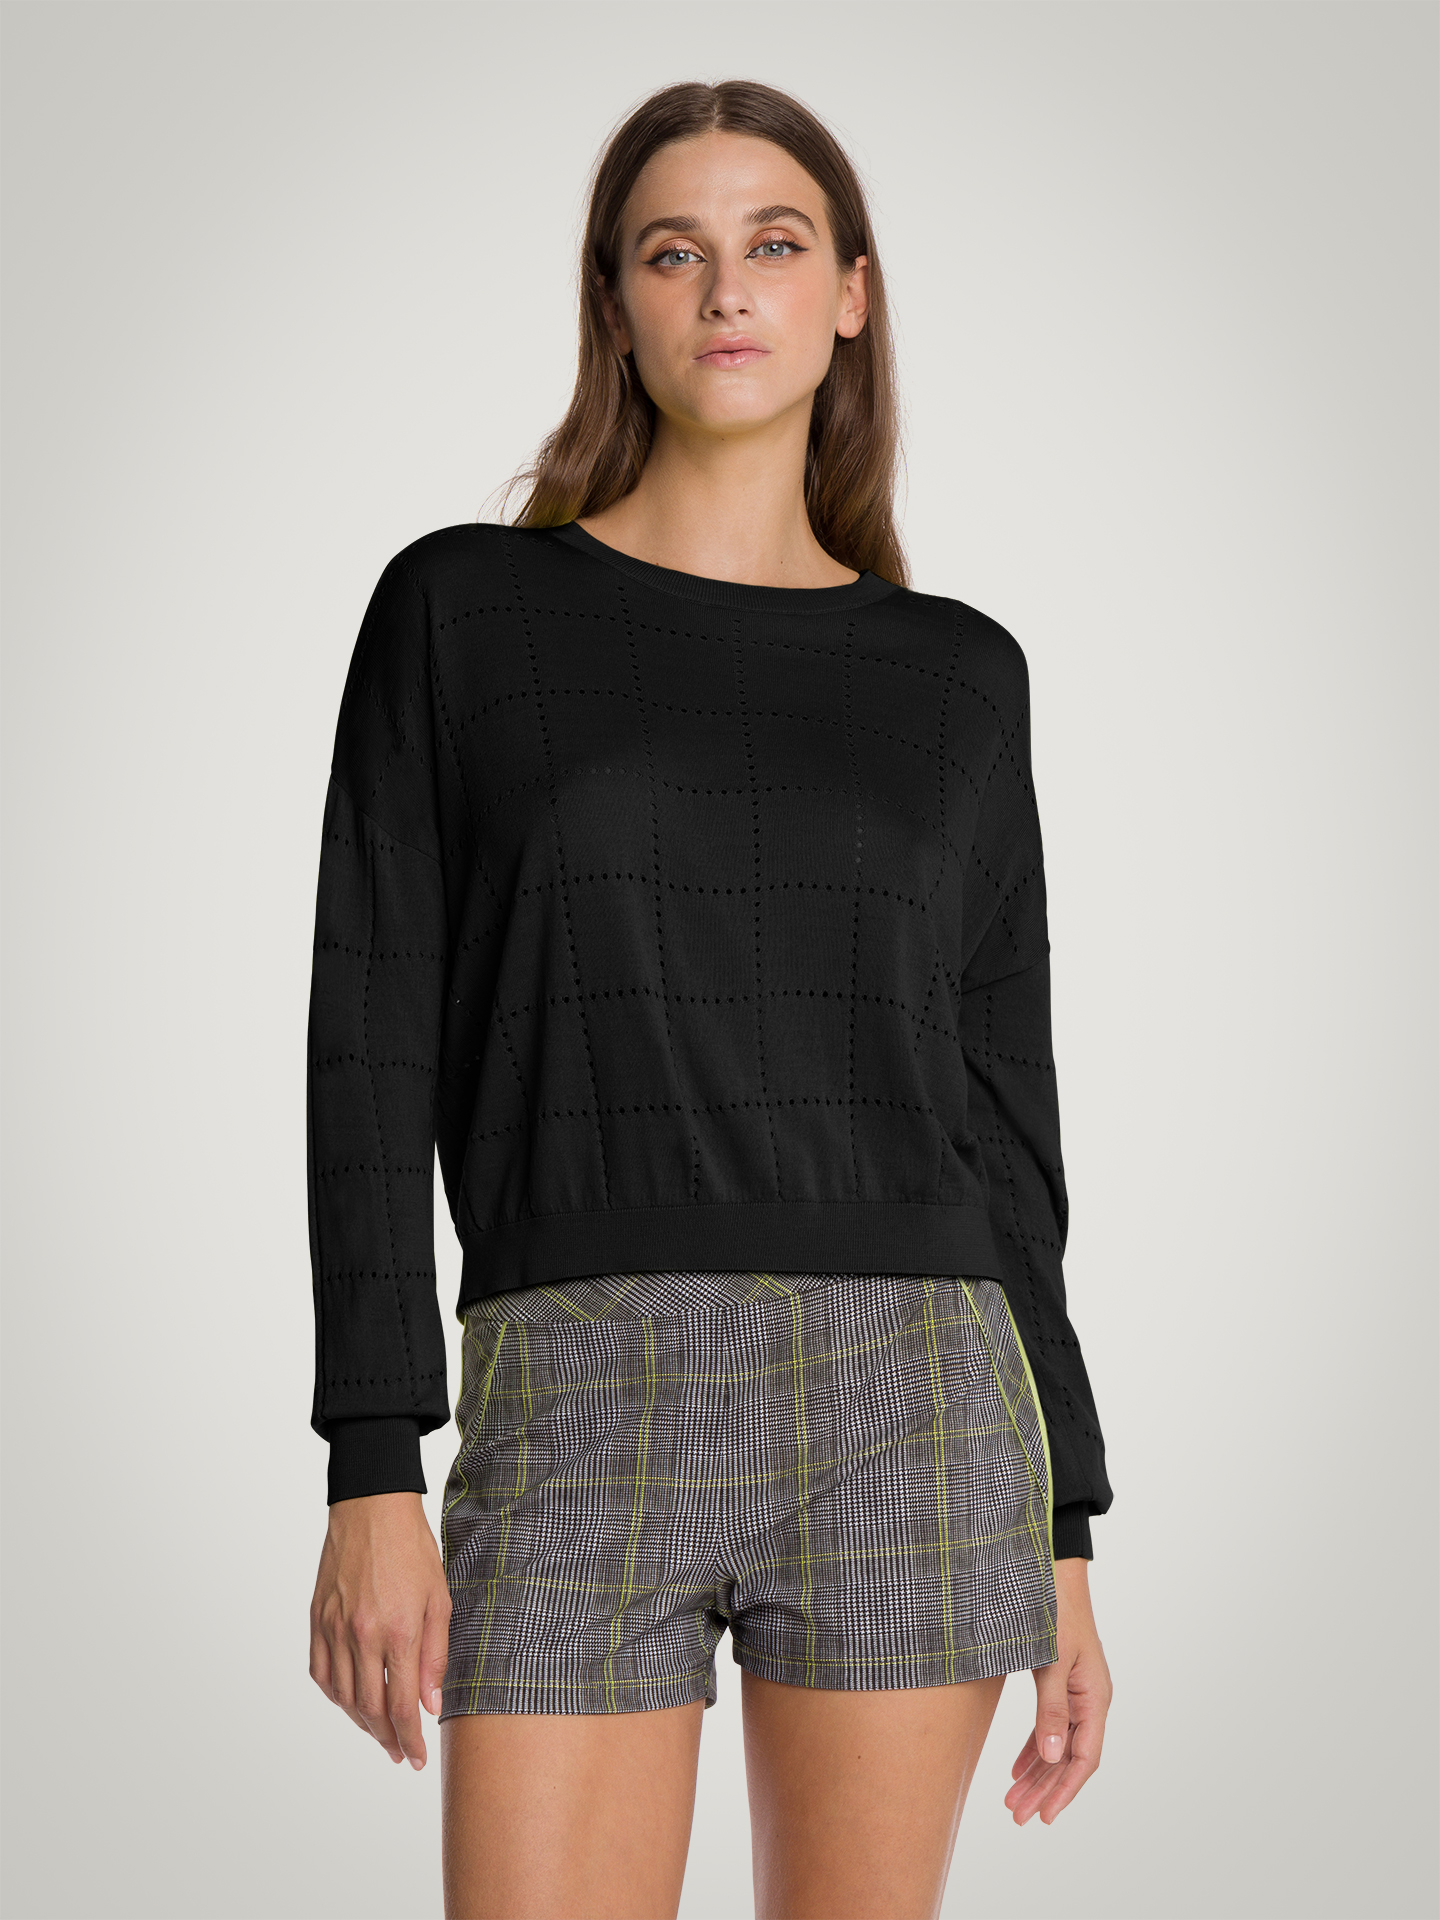 Wolford - Summer Knit Top Long Sleeves, Frau, black, Größe: M günstig online kaufen